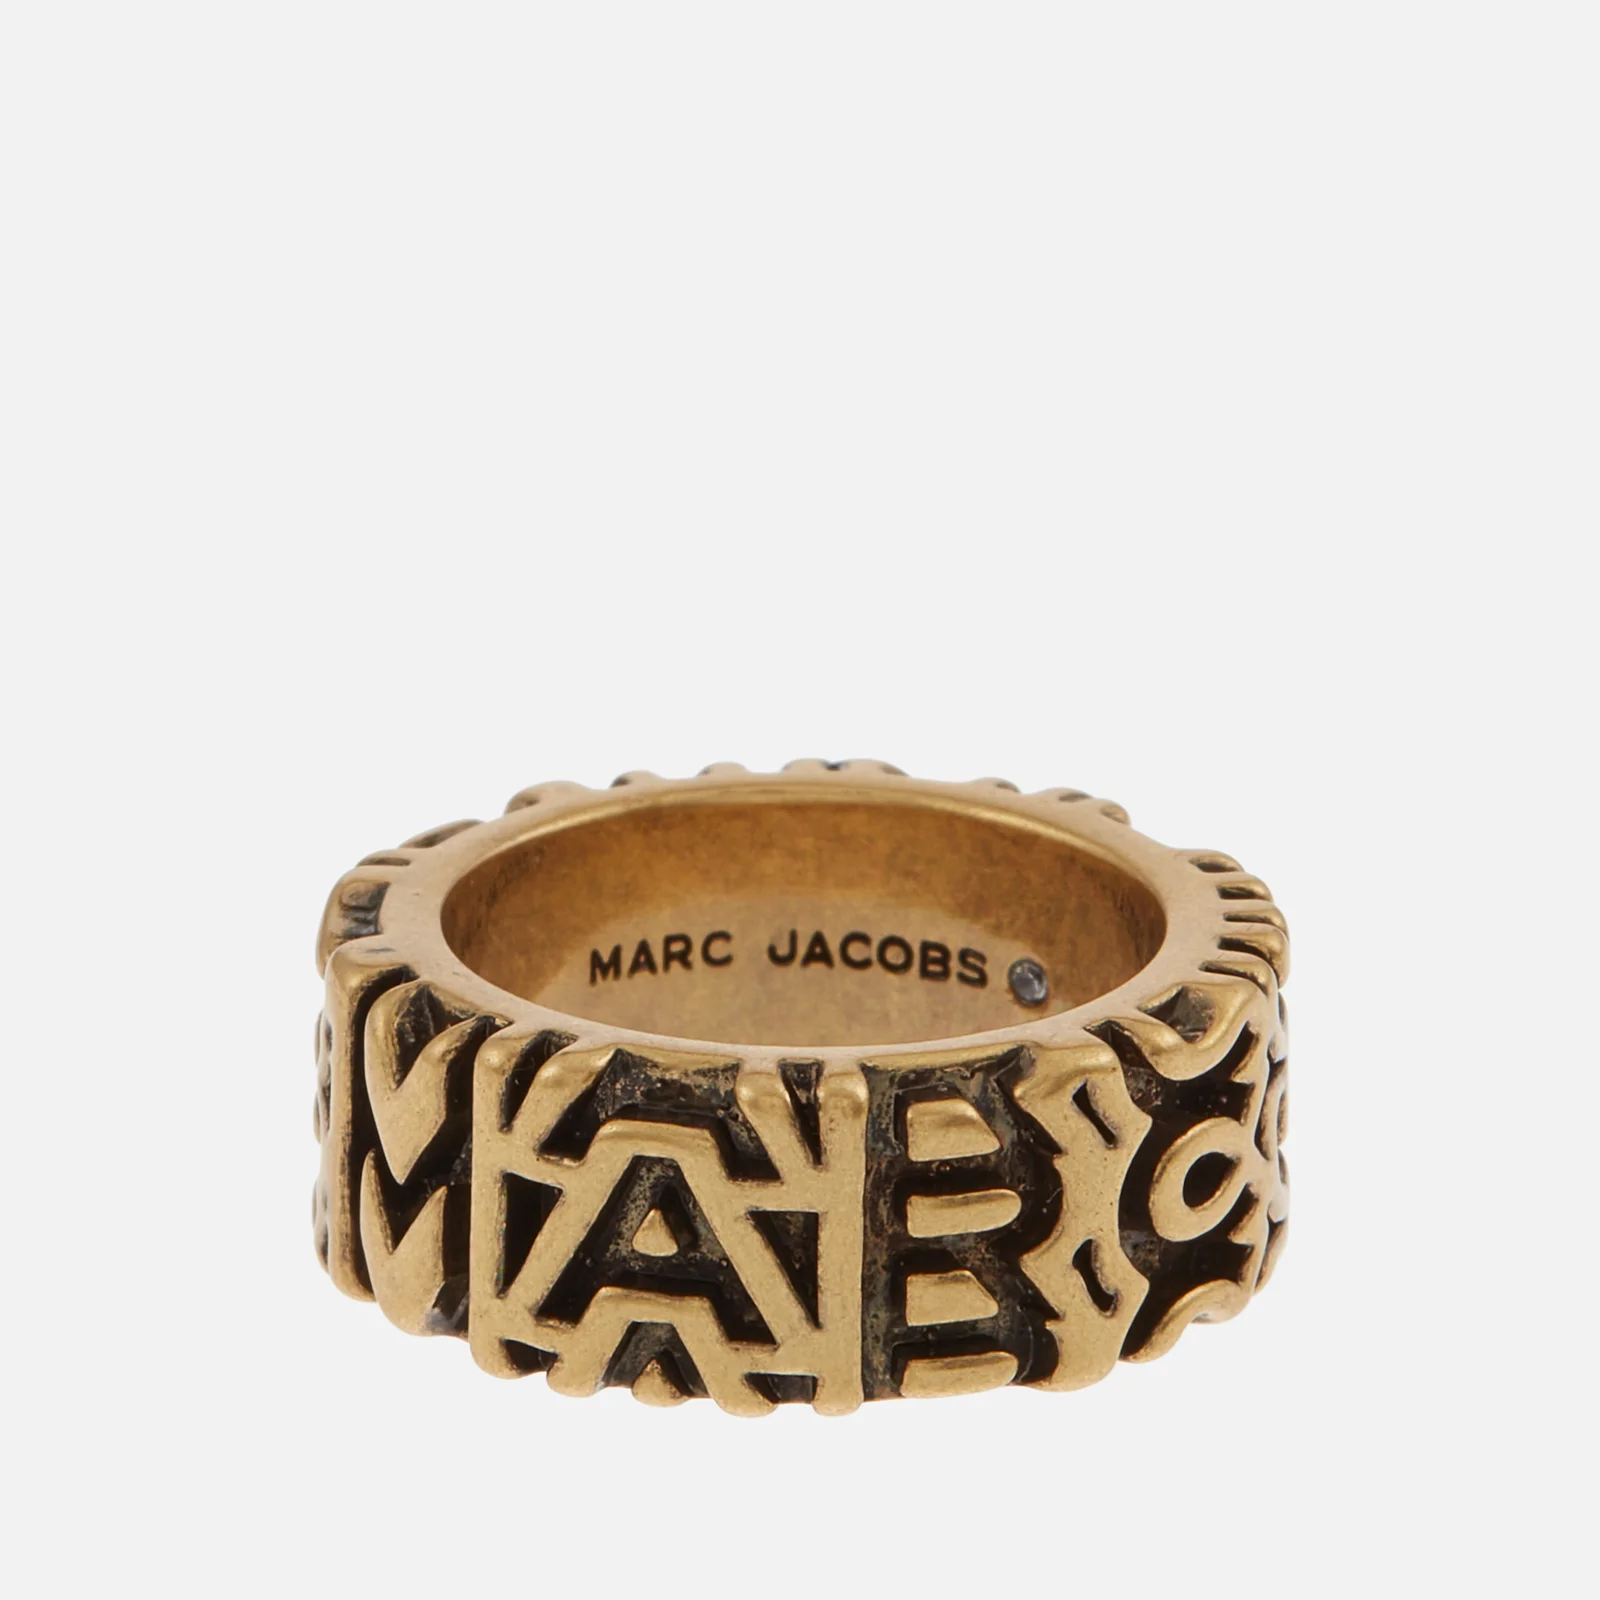 Marc Jacobs Monogram Engraved Gold-Tone Ring Image 1